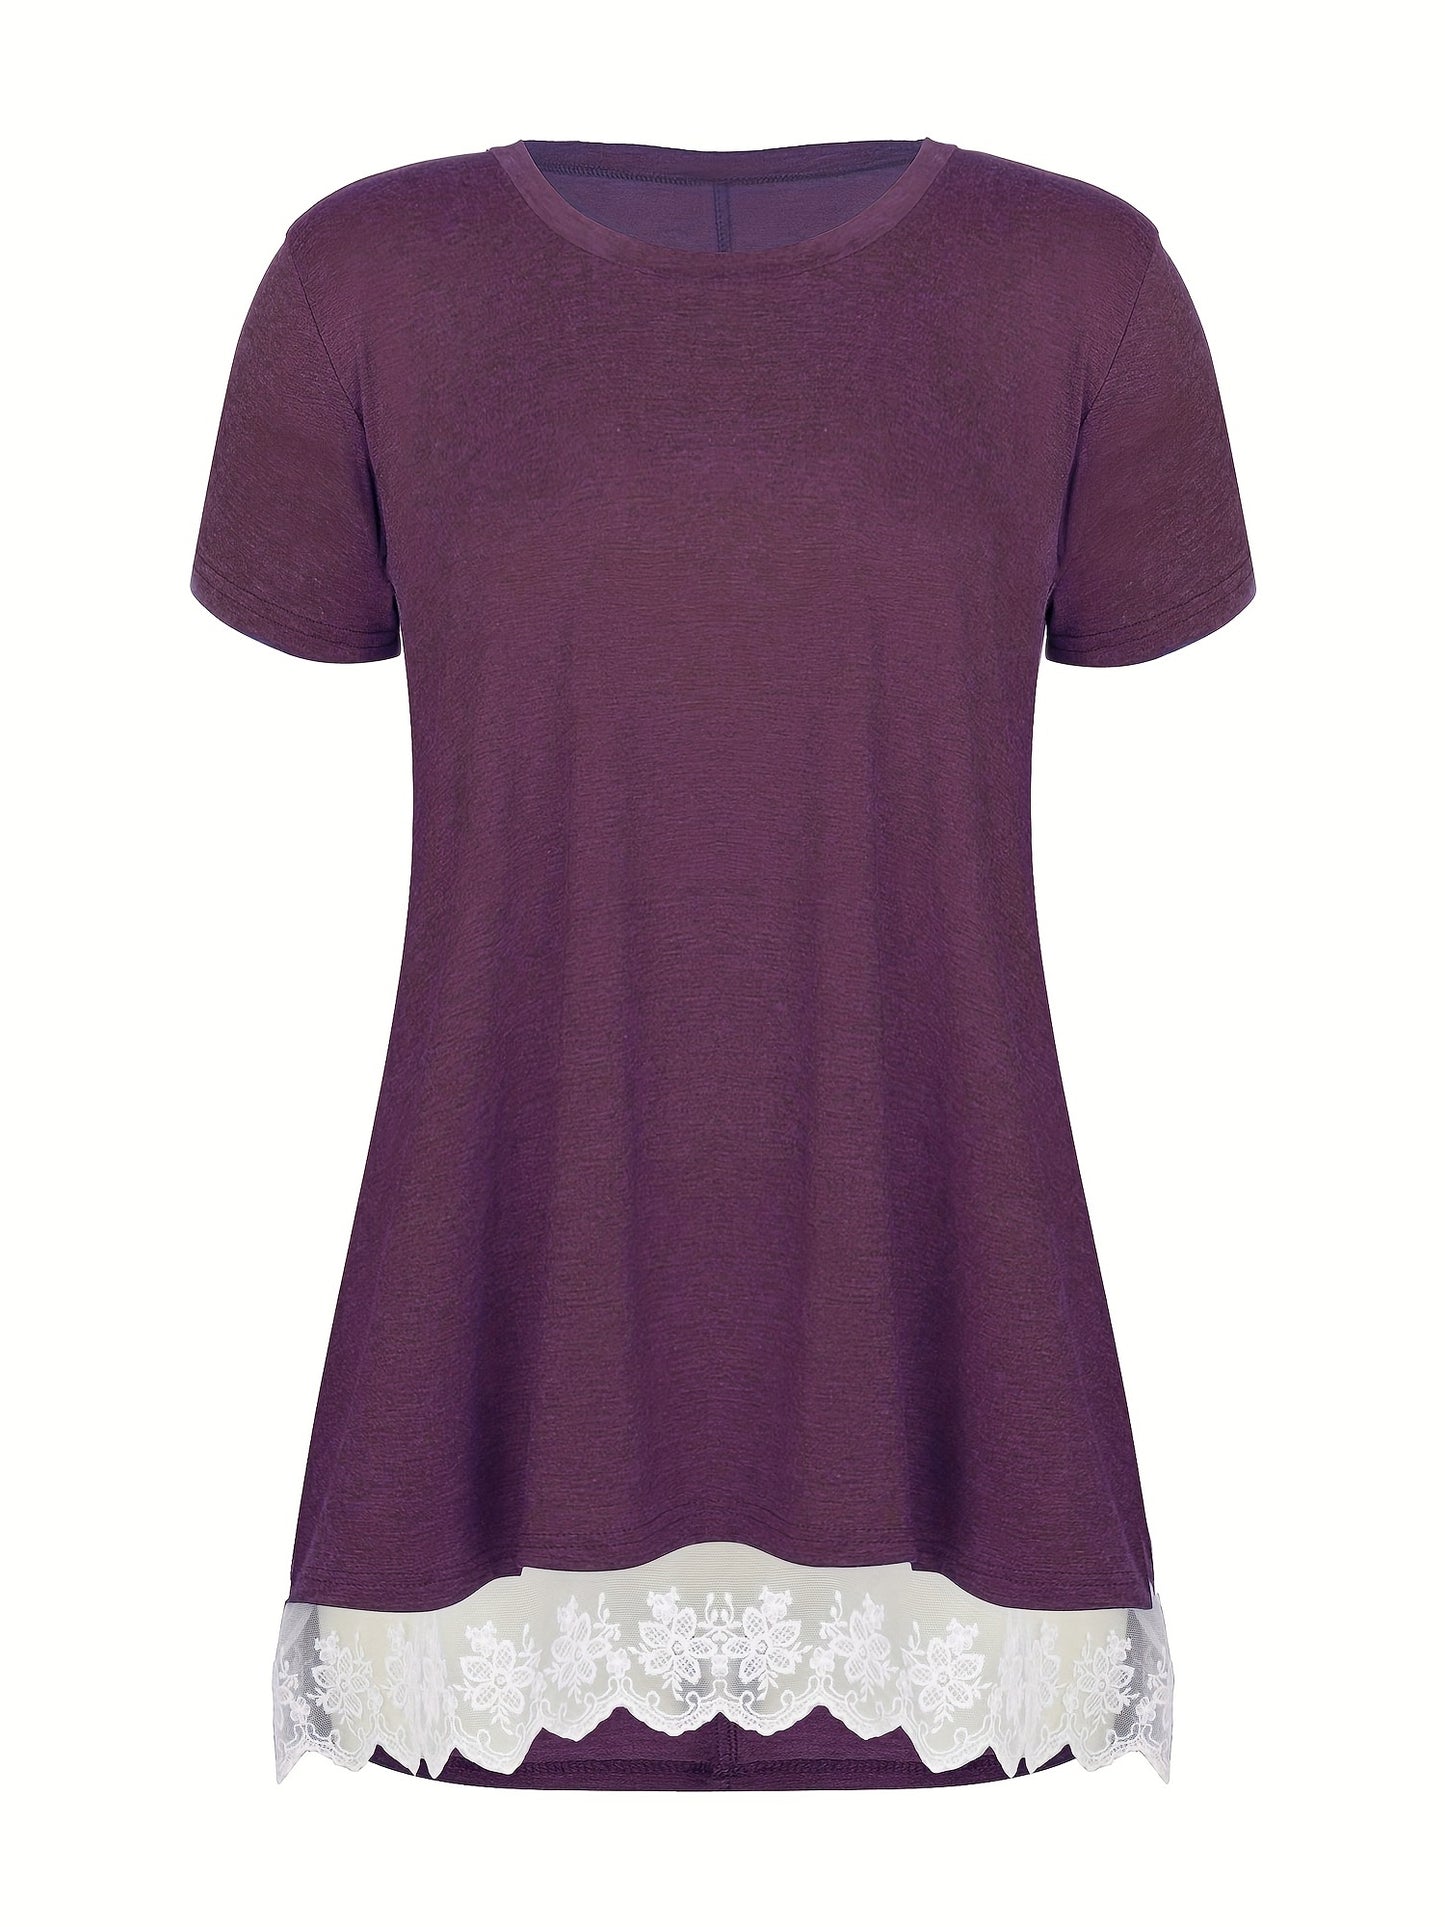 Antmvs Plus Size Casual T-shirt, Women's Plus Contrast Lace Short Sleeve Round Neck T-shirt